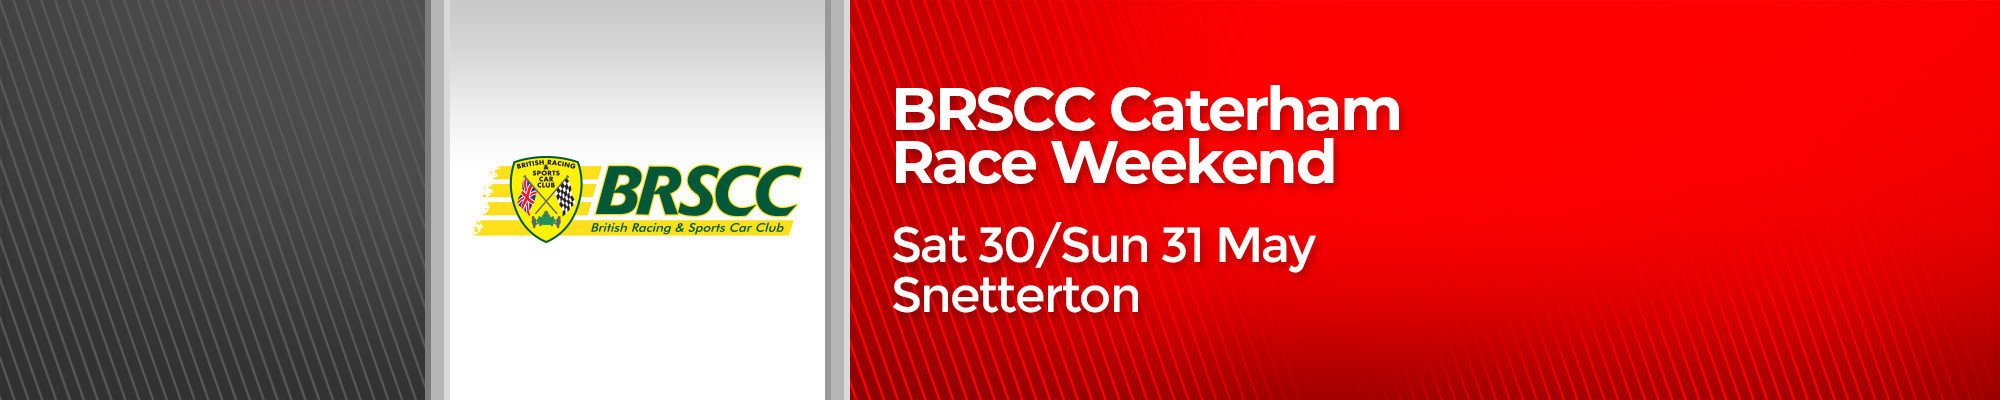 BRSCC Caterham Championships - POSTPONED